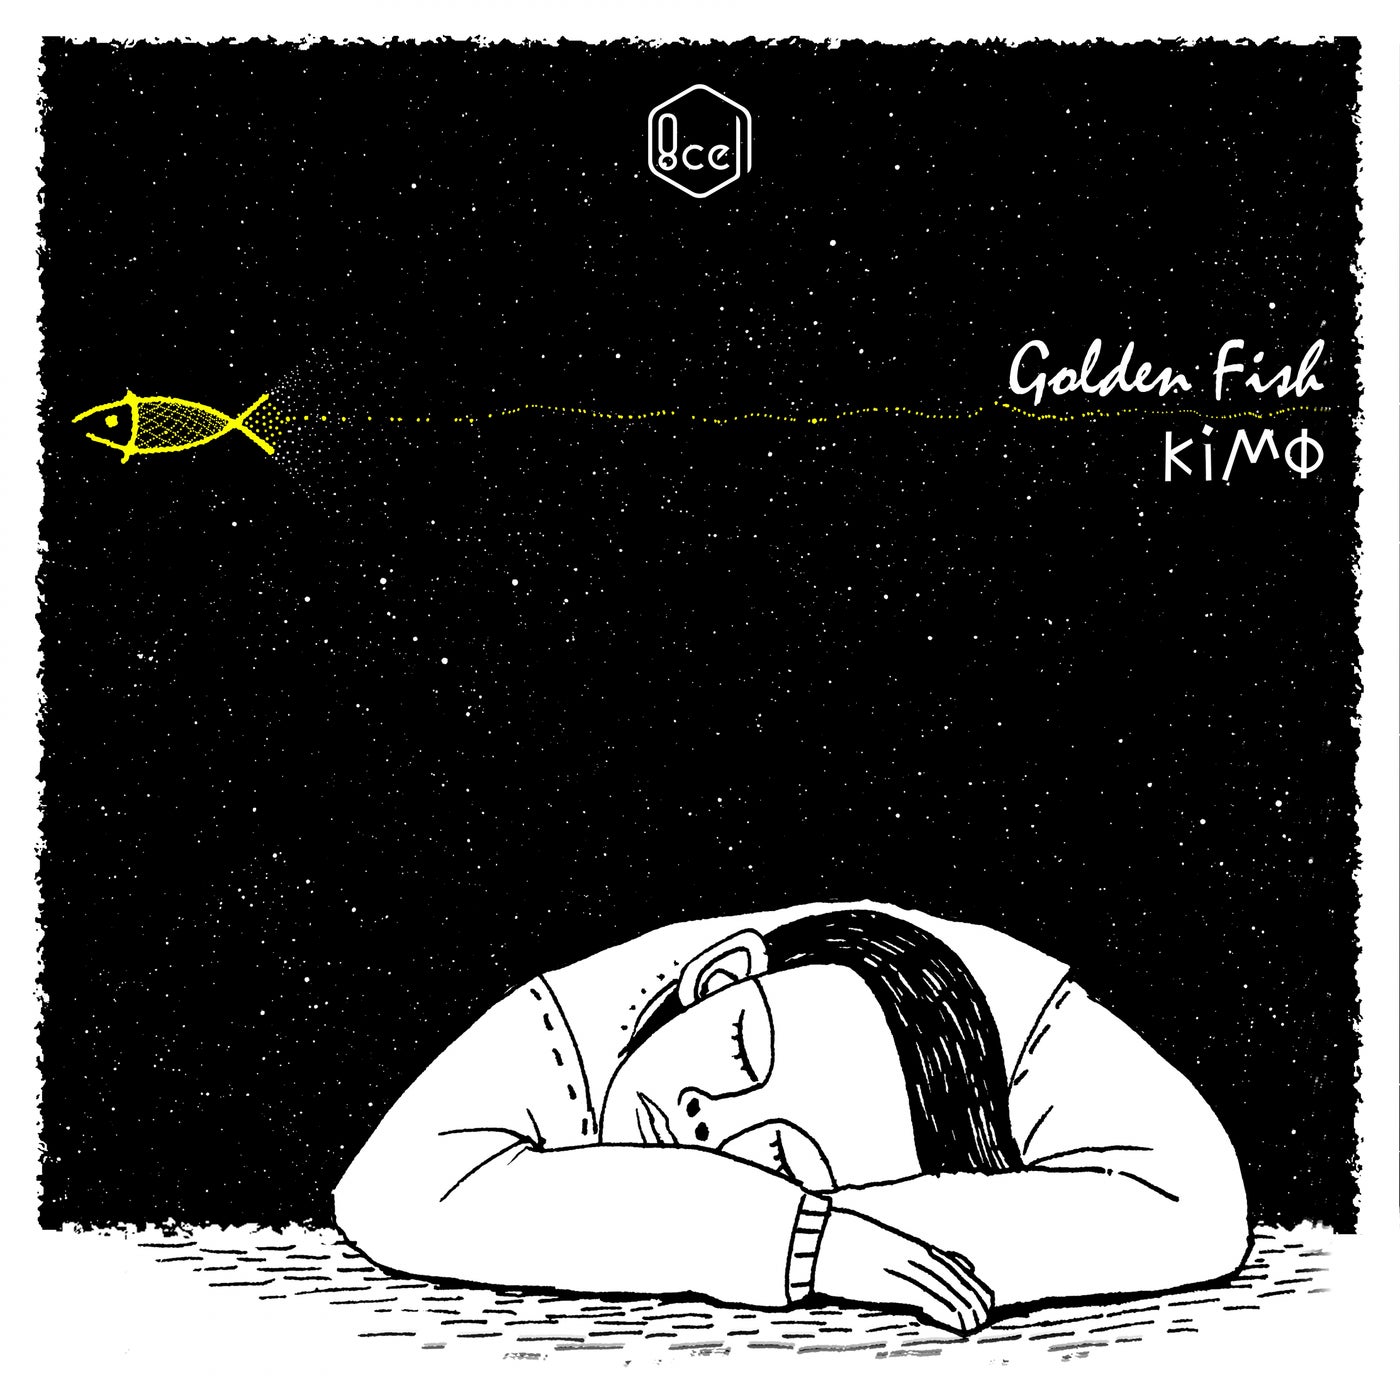 Kim0 – Golden Fish [8CLL0024]